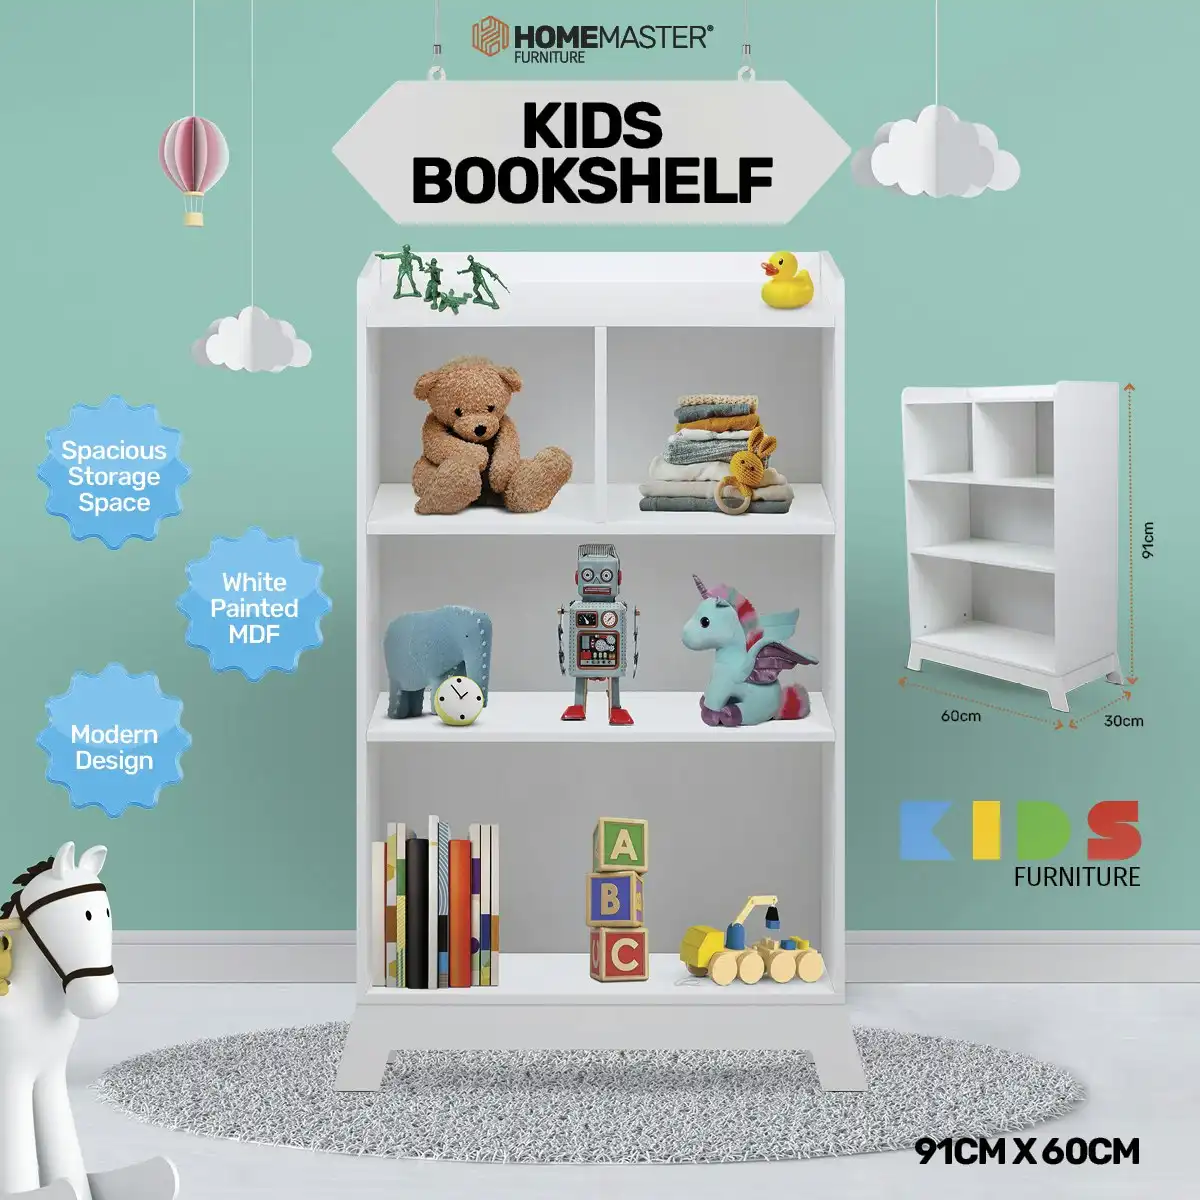 Home Master Kids White Bookshelf Spacious Shelving Stylish Design 91 x 60cm